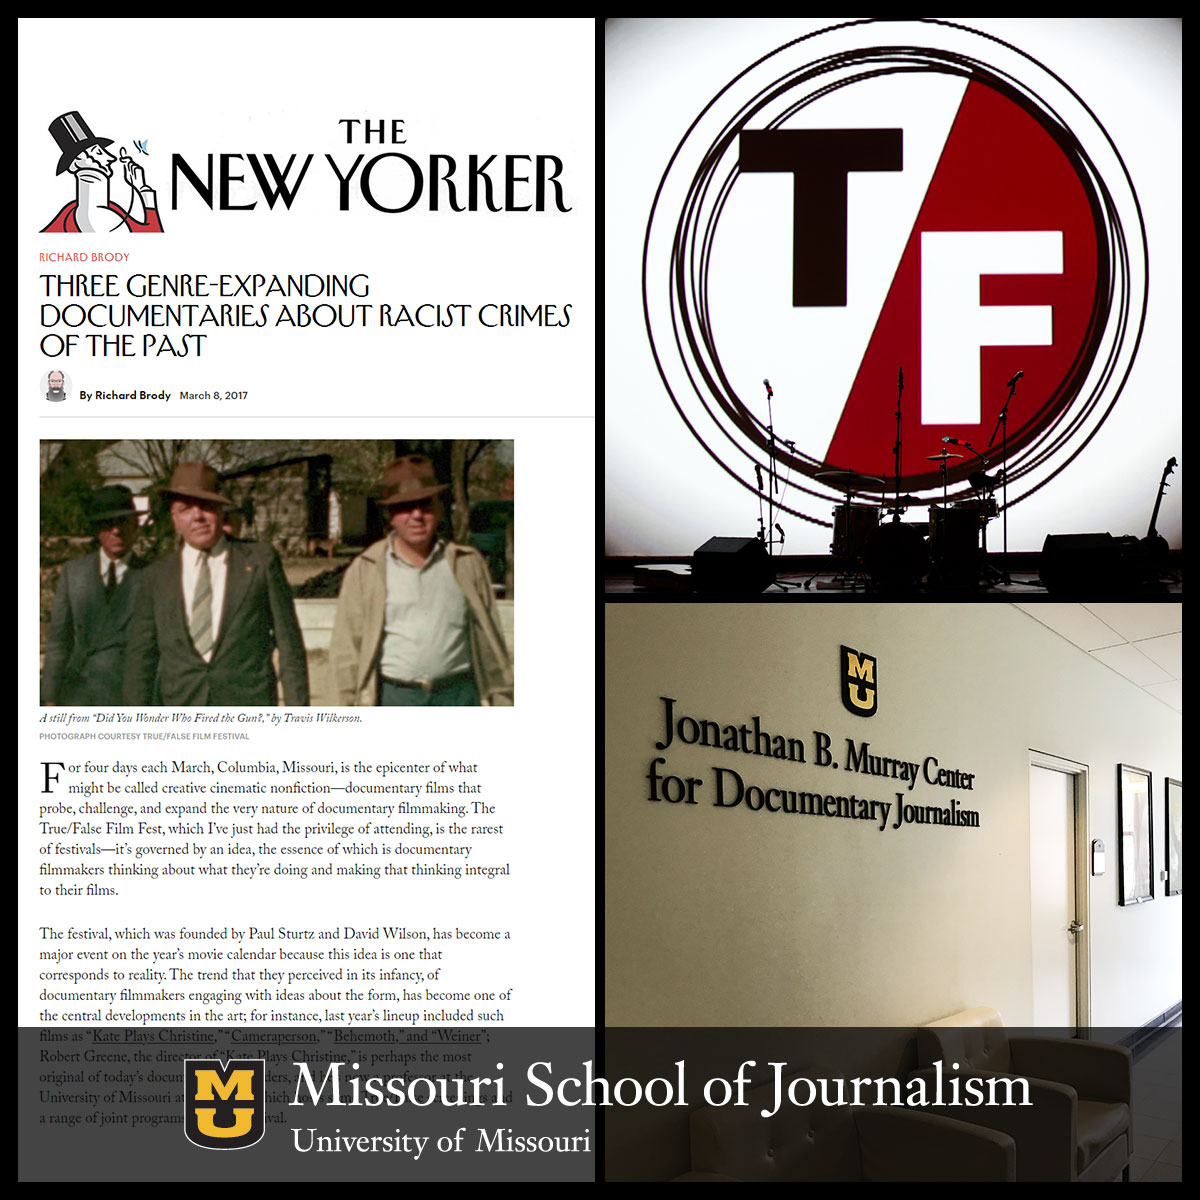 The Jonathan B. Murray Center for Documentary Journalism at the Missouri School of Journalism